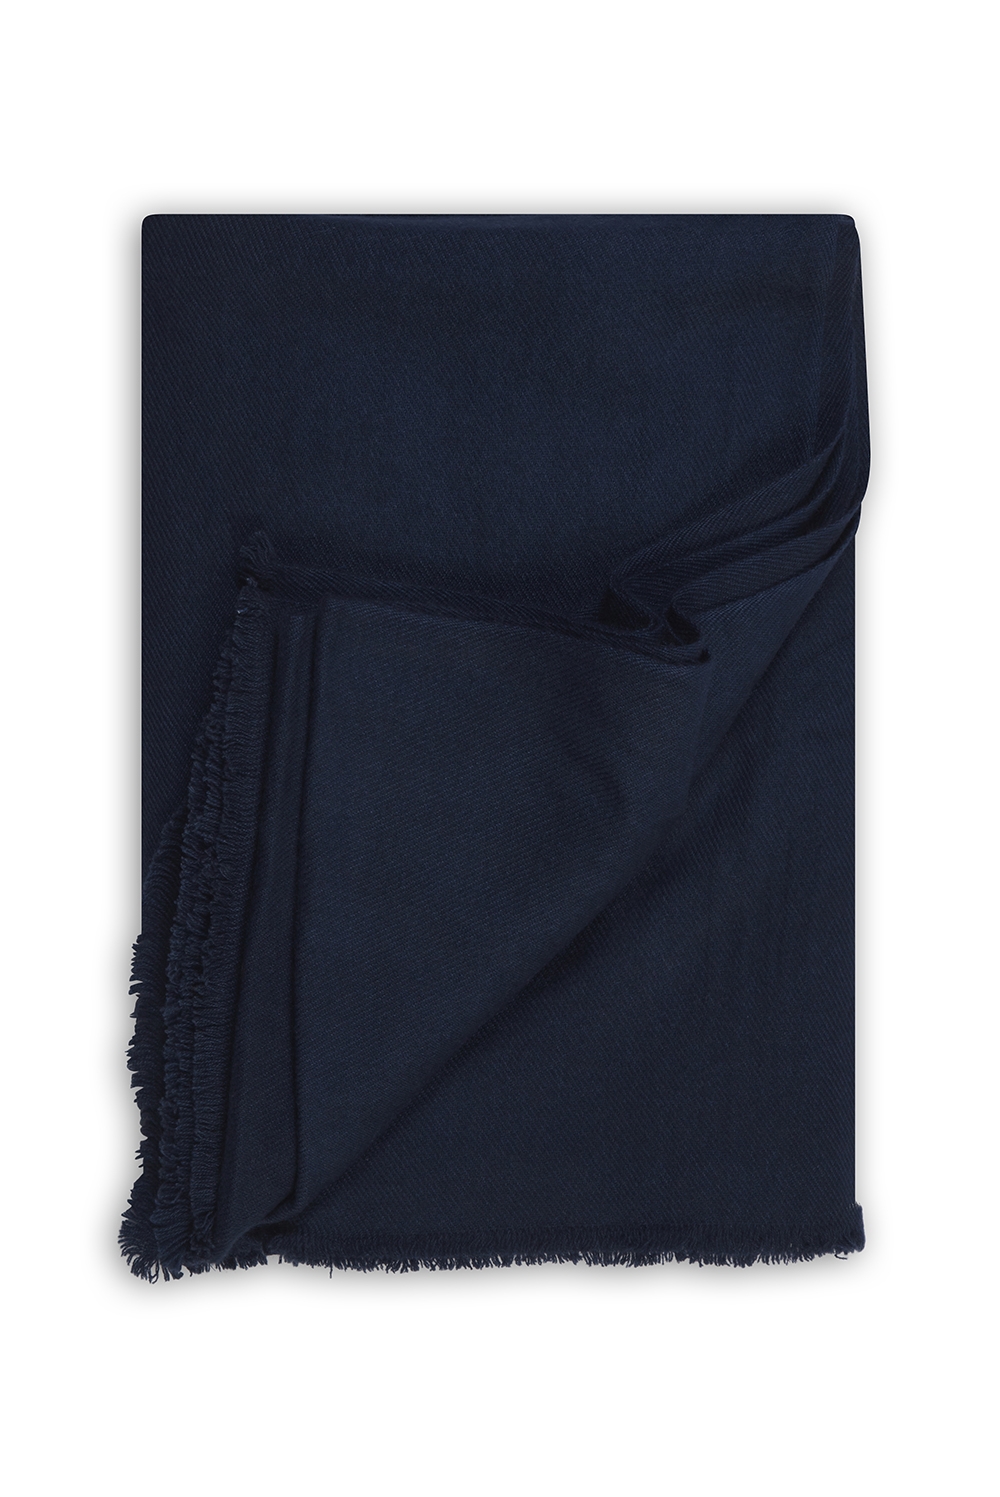 Cashmere accessoires neu toodoo plain l 220 x 220 navy blau 220x220cm